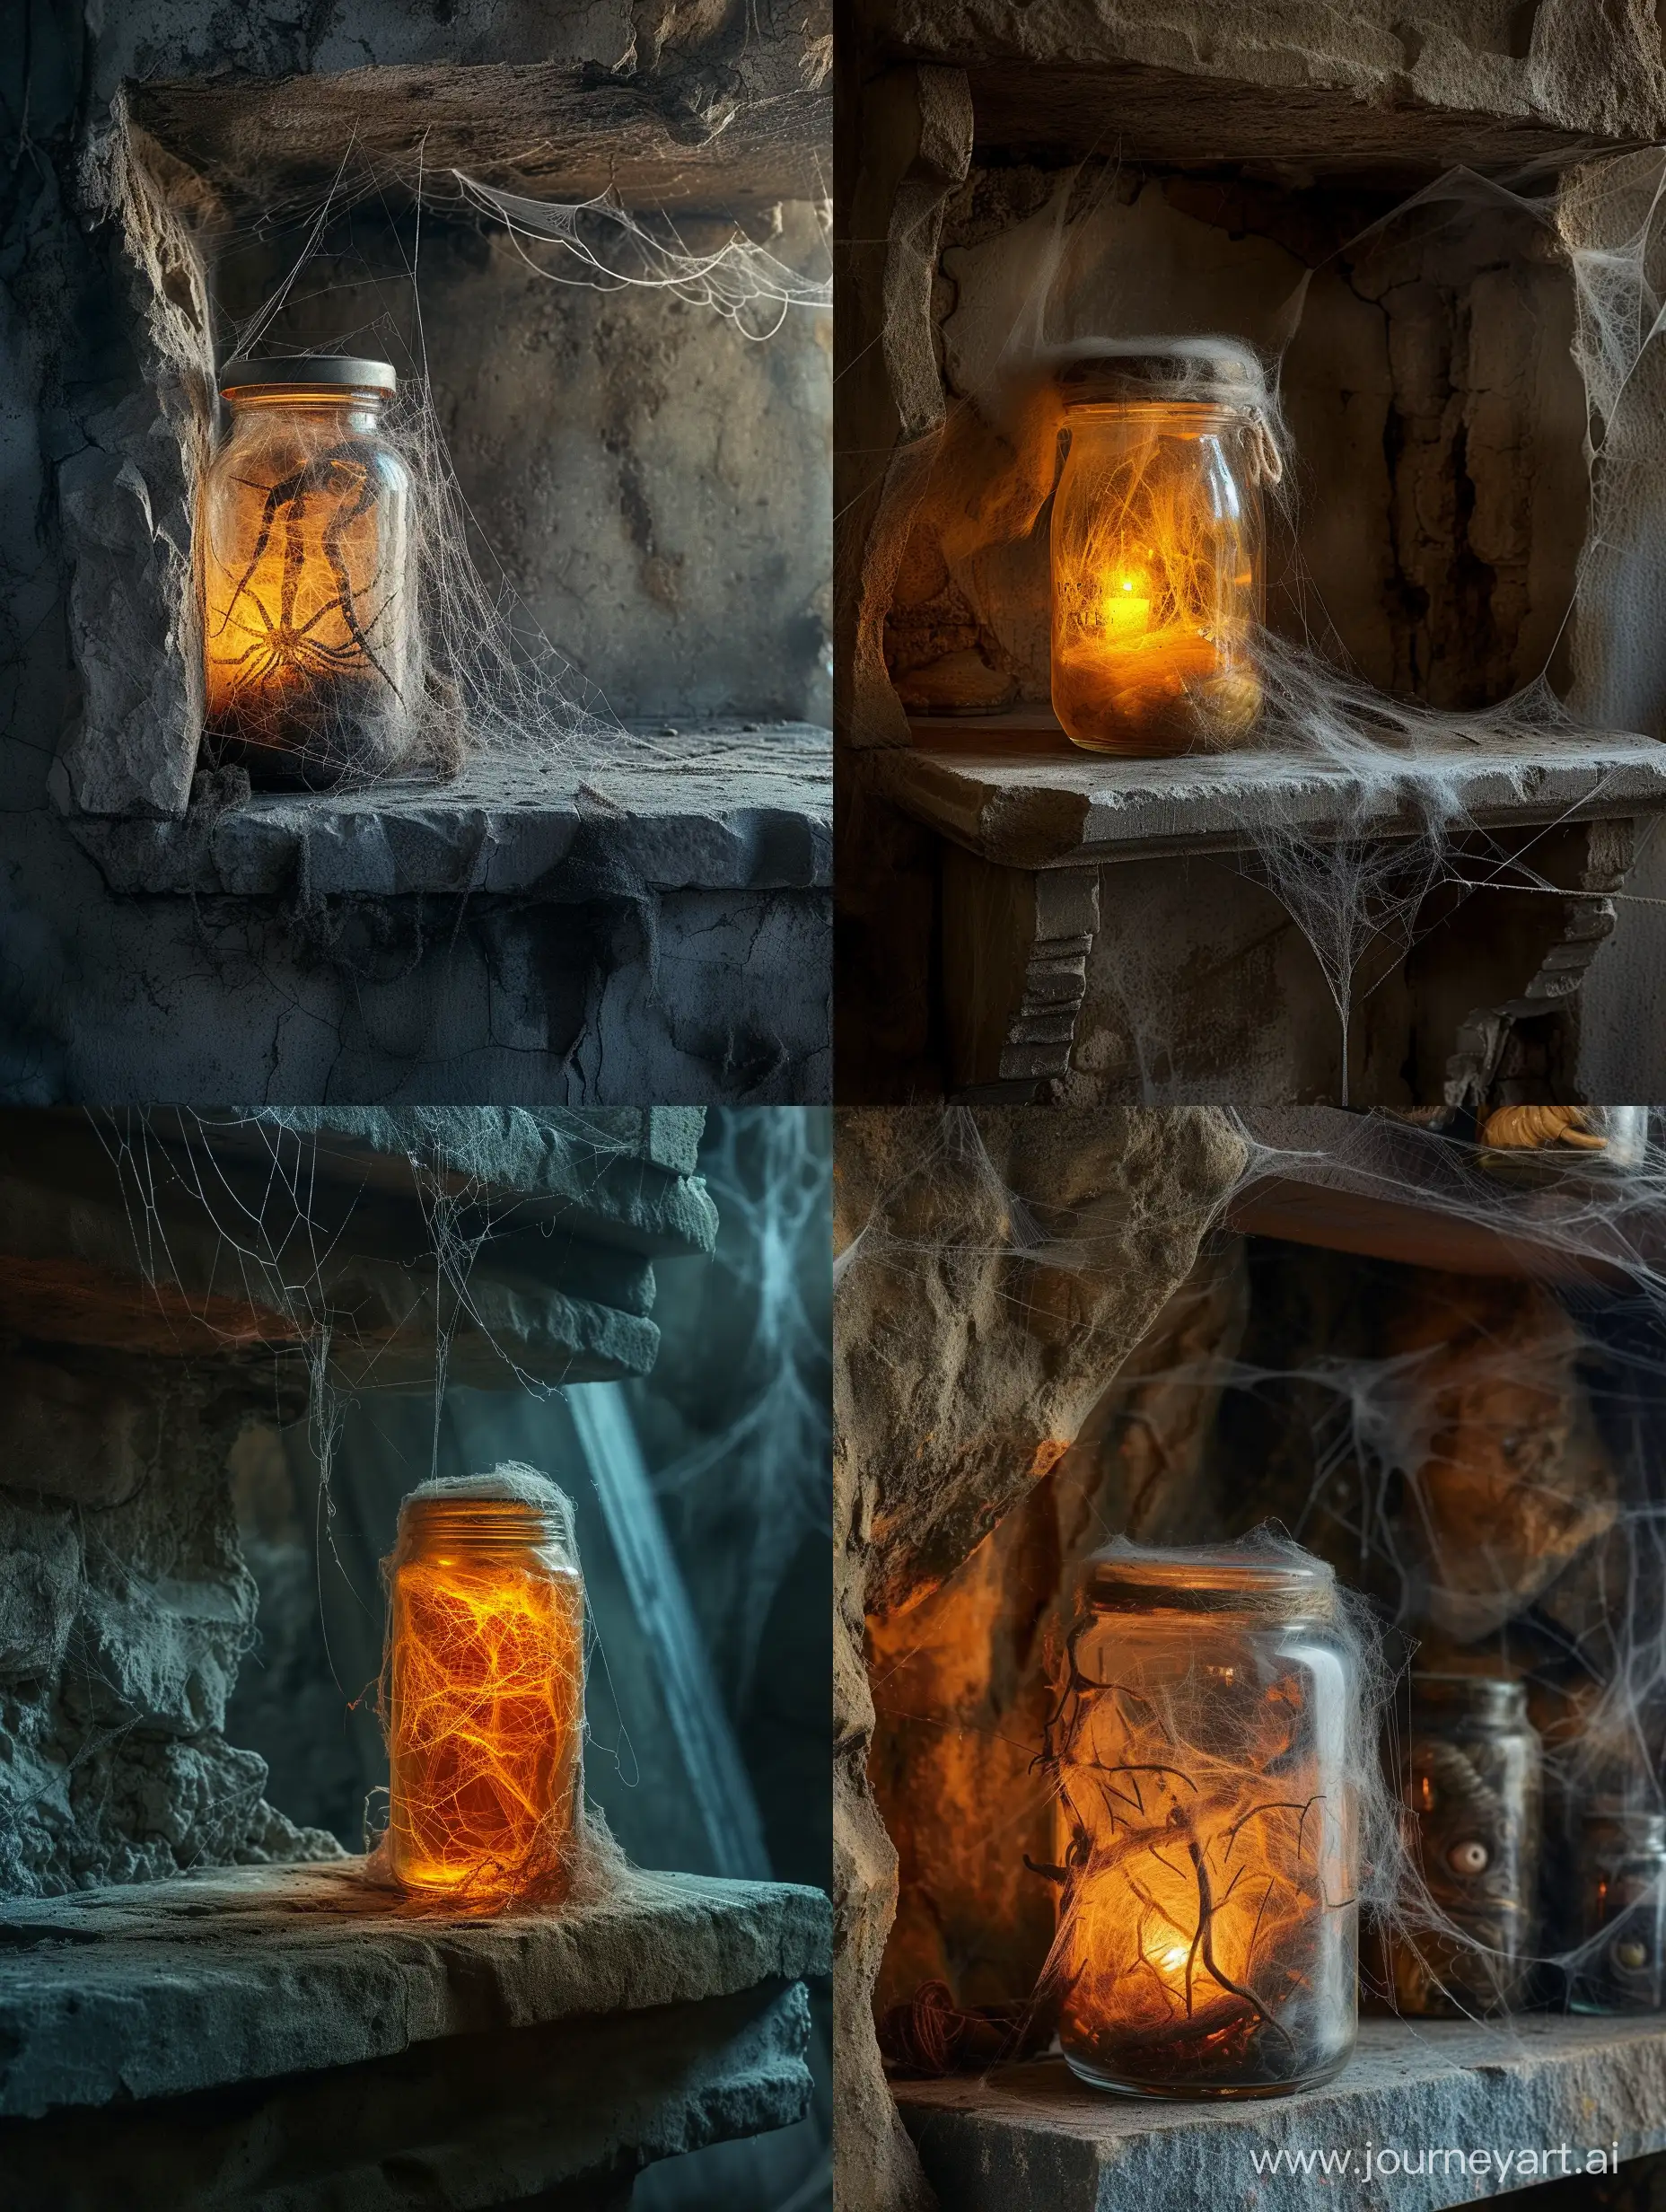 A real dark World inside a jar,on ancient stone shelf,cobwebs everywhere,incredible detail,warm light,terrifying